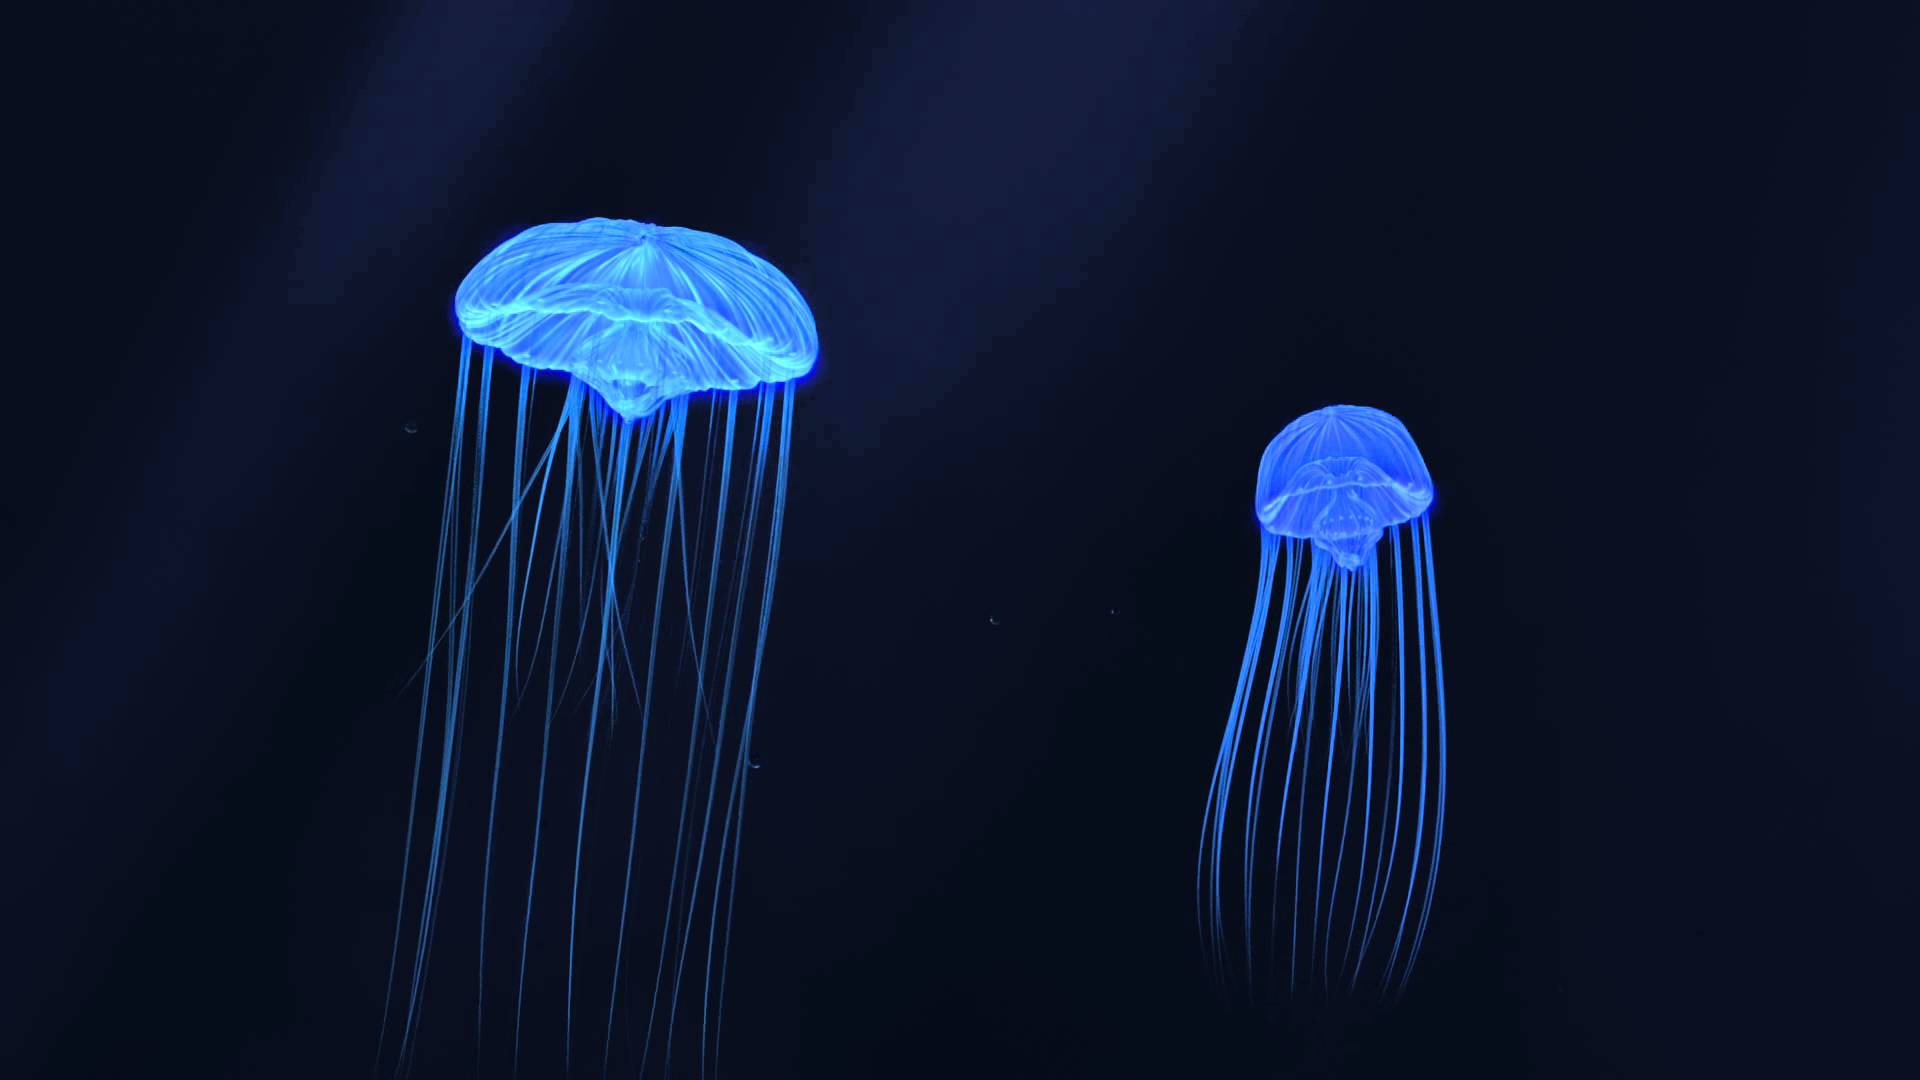 Jellyfish64's